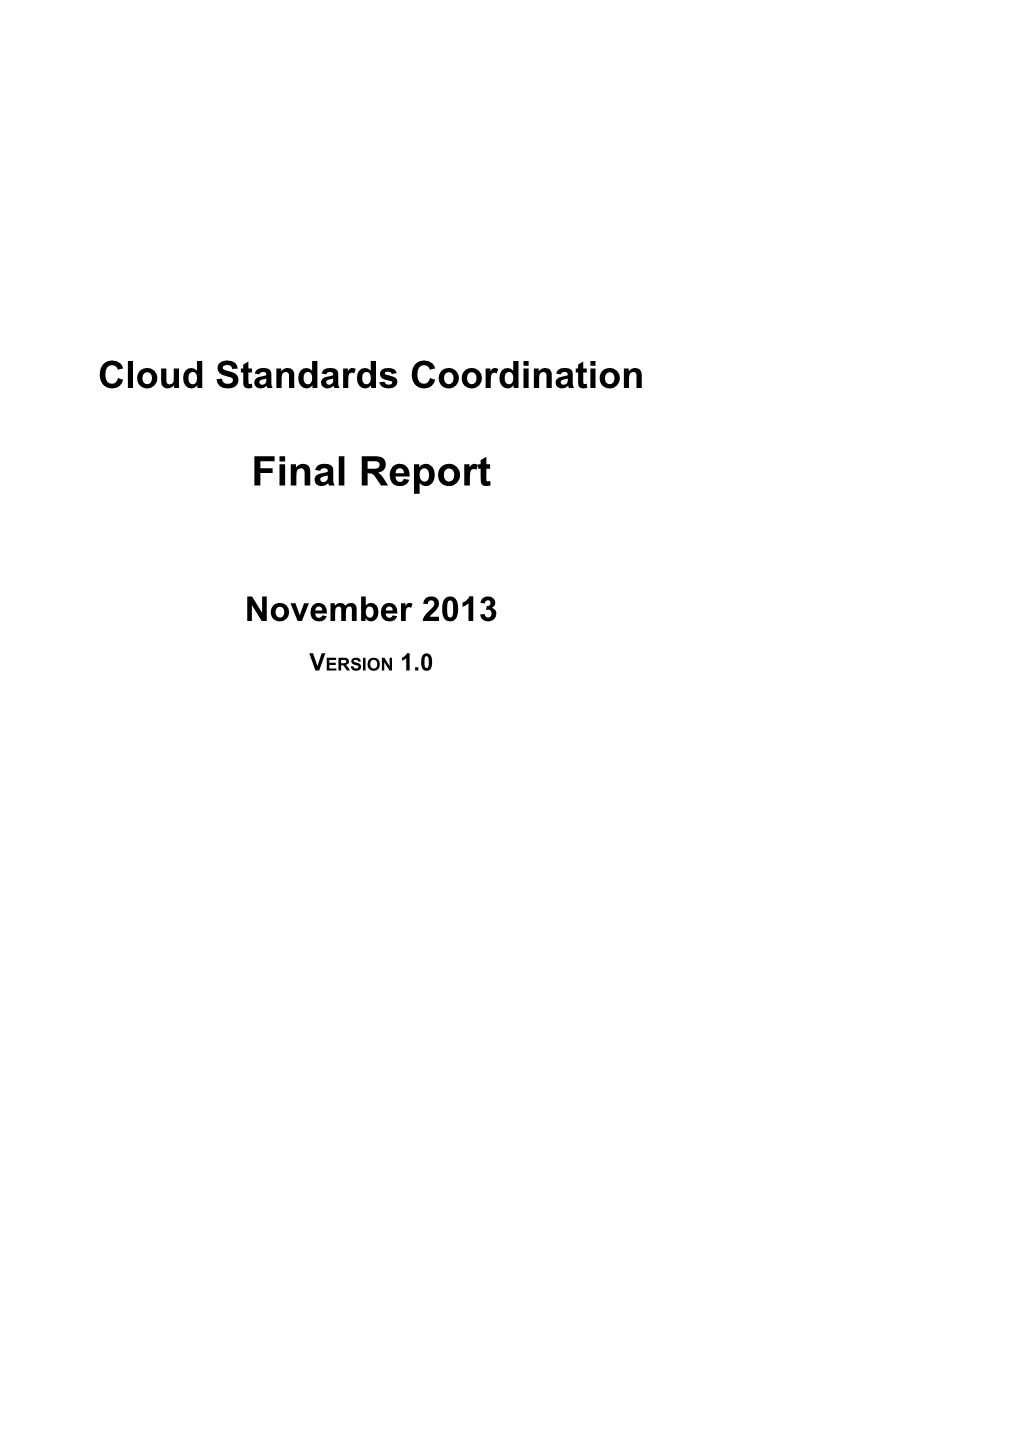 Cloud Standards Coordination - Final Report